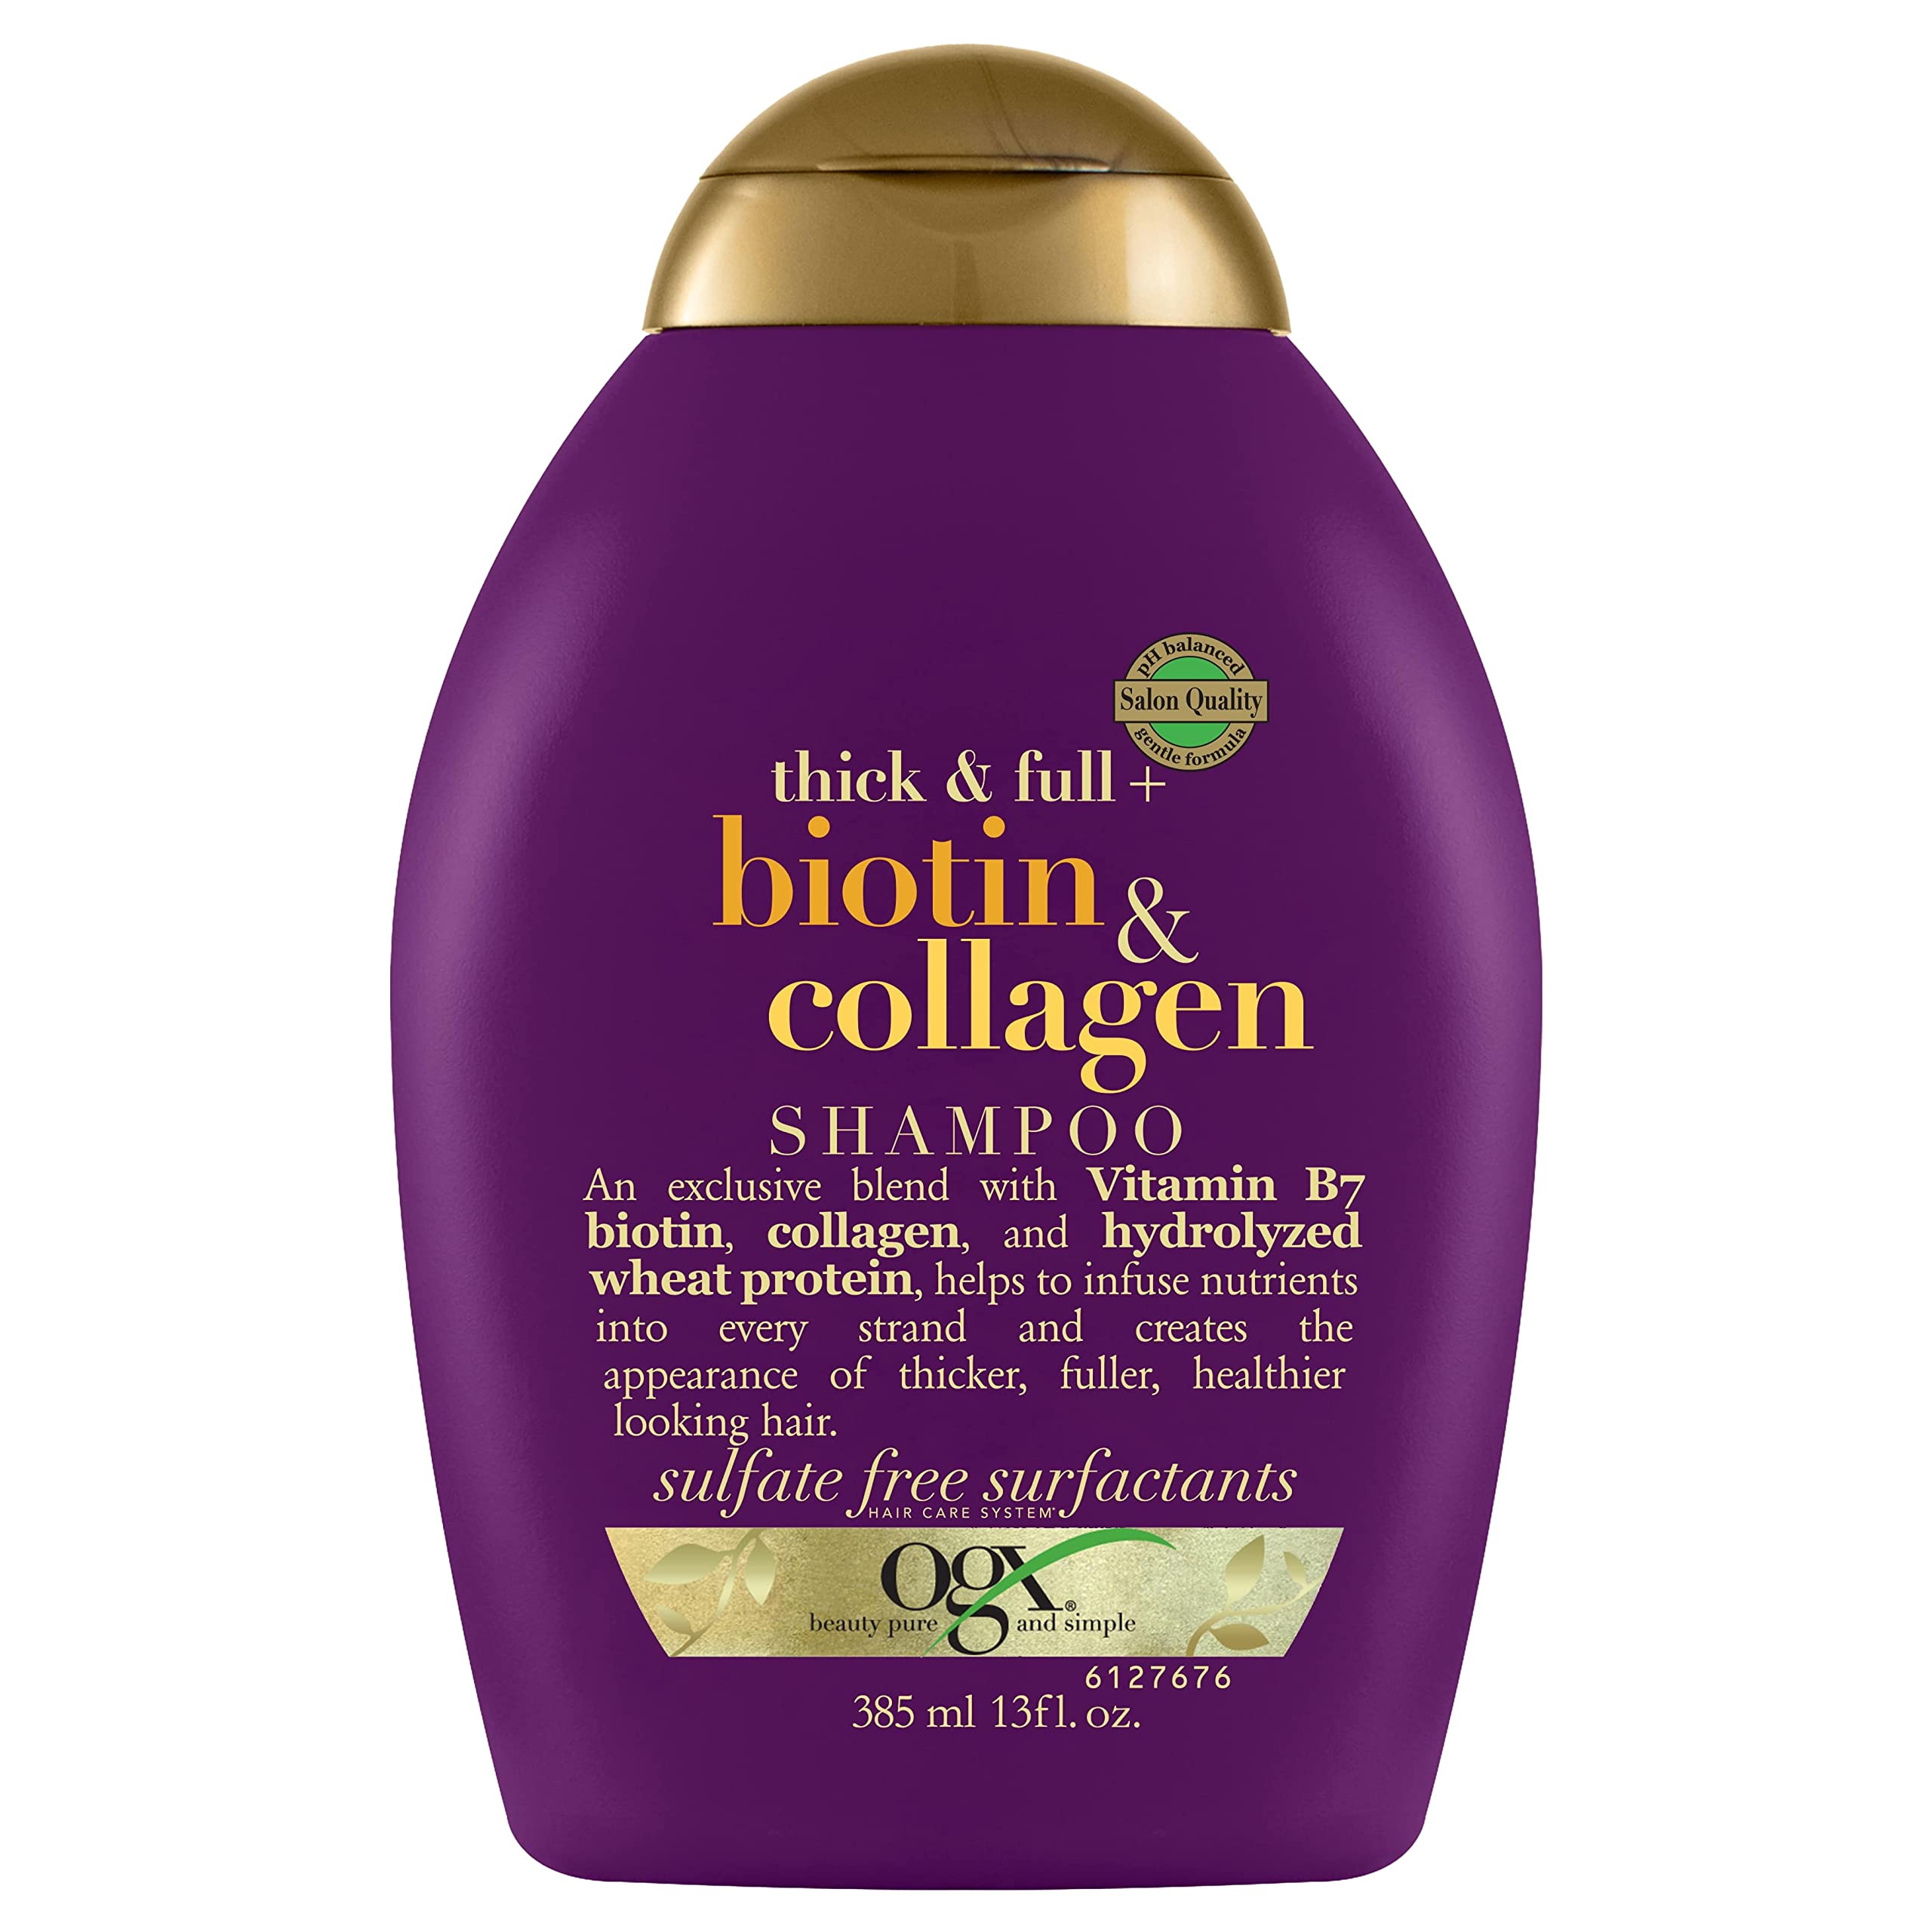 Mua OGX Thick & Full + Biotin & Collagen Volumizing Shampoo for Thin Hair,  Thickening Shampoo with Vitamin B7 & Hydrolyzed Wheat Protein,  Paraben-Free, Sulfate-Free Surfactants, 13 fl oz trên Amazon Mỹ